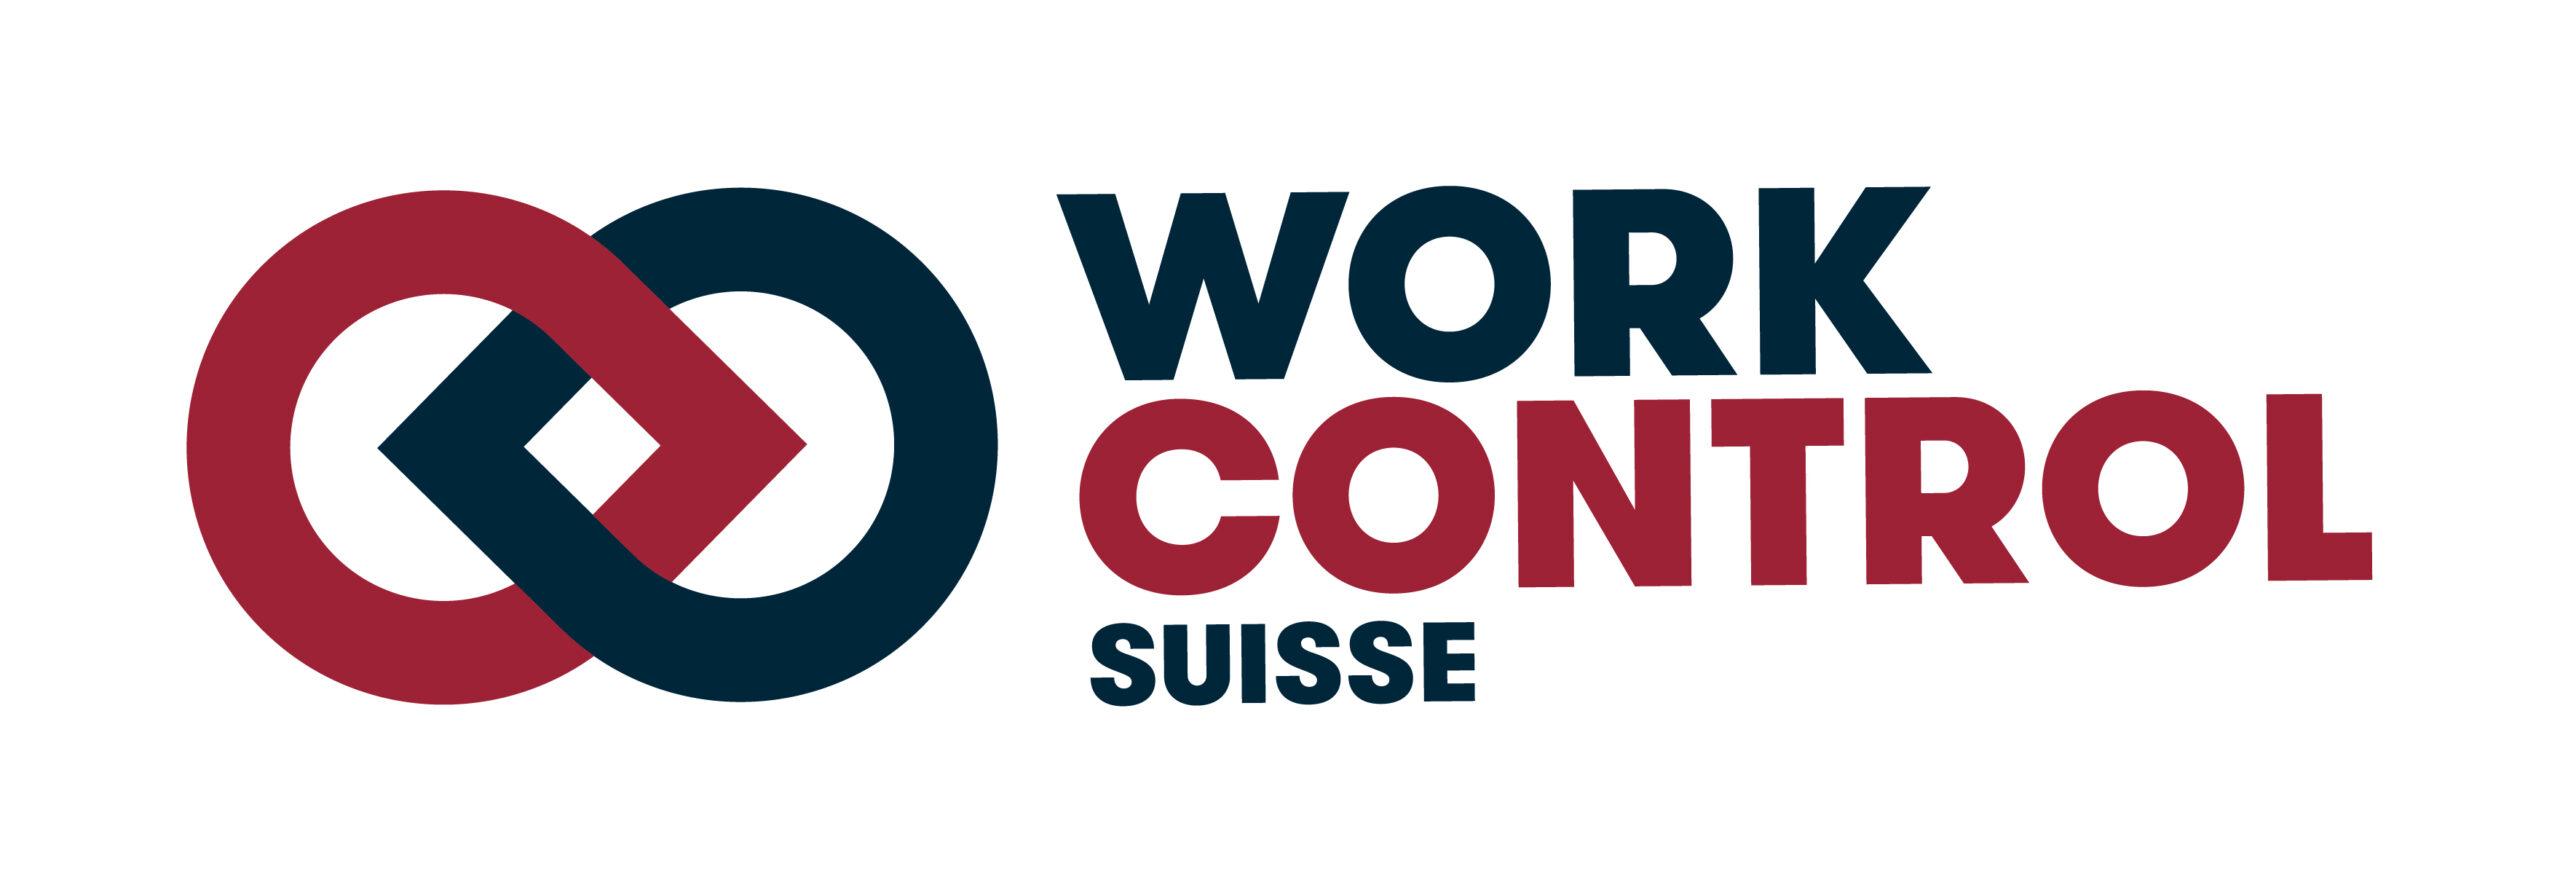 work control suisse logo